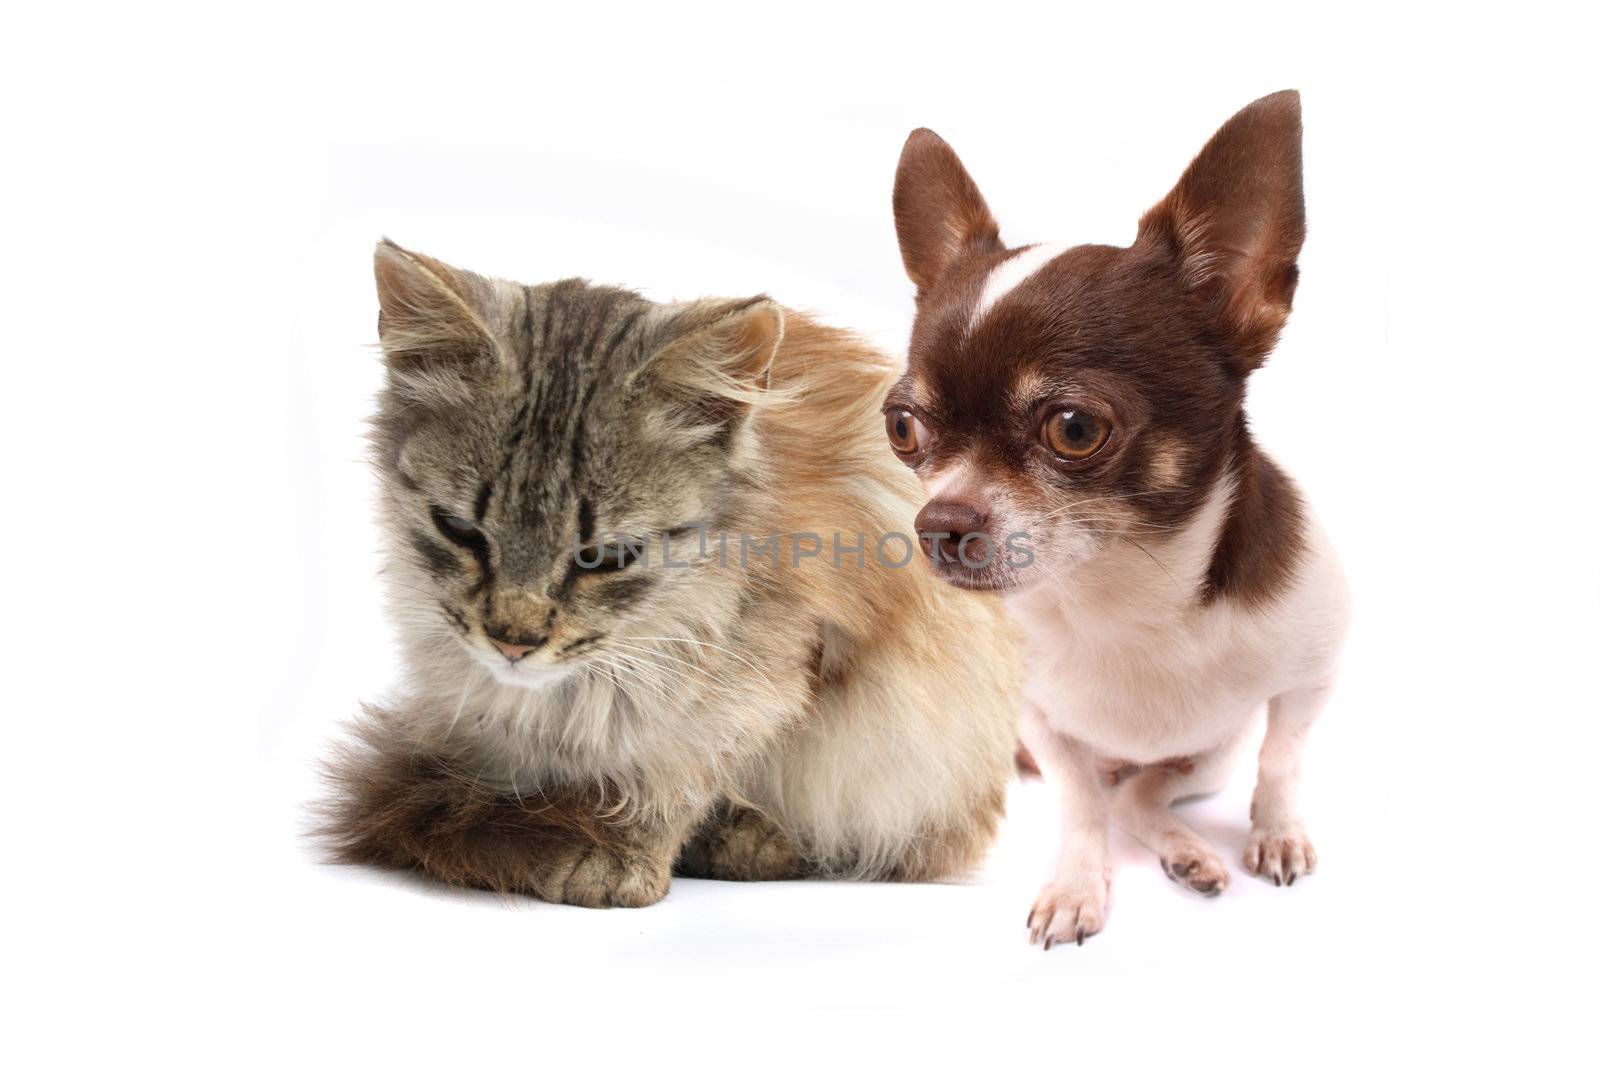 cat and dog by jonnysek